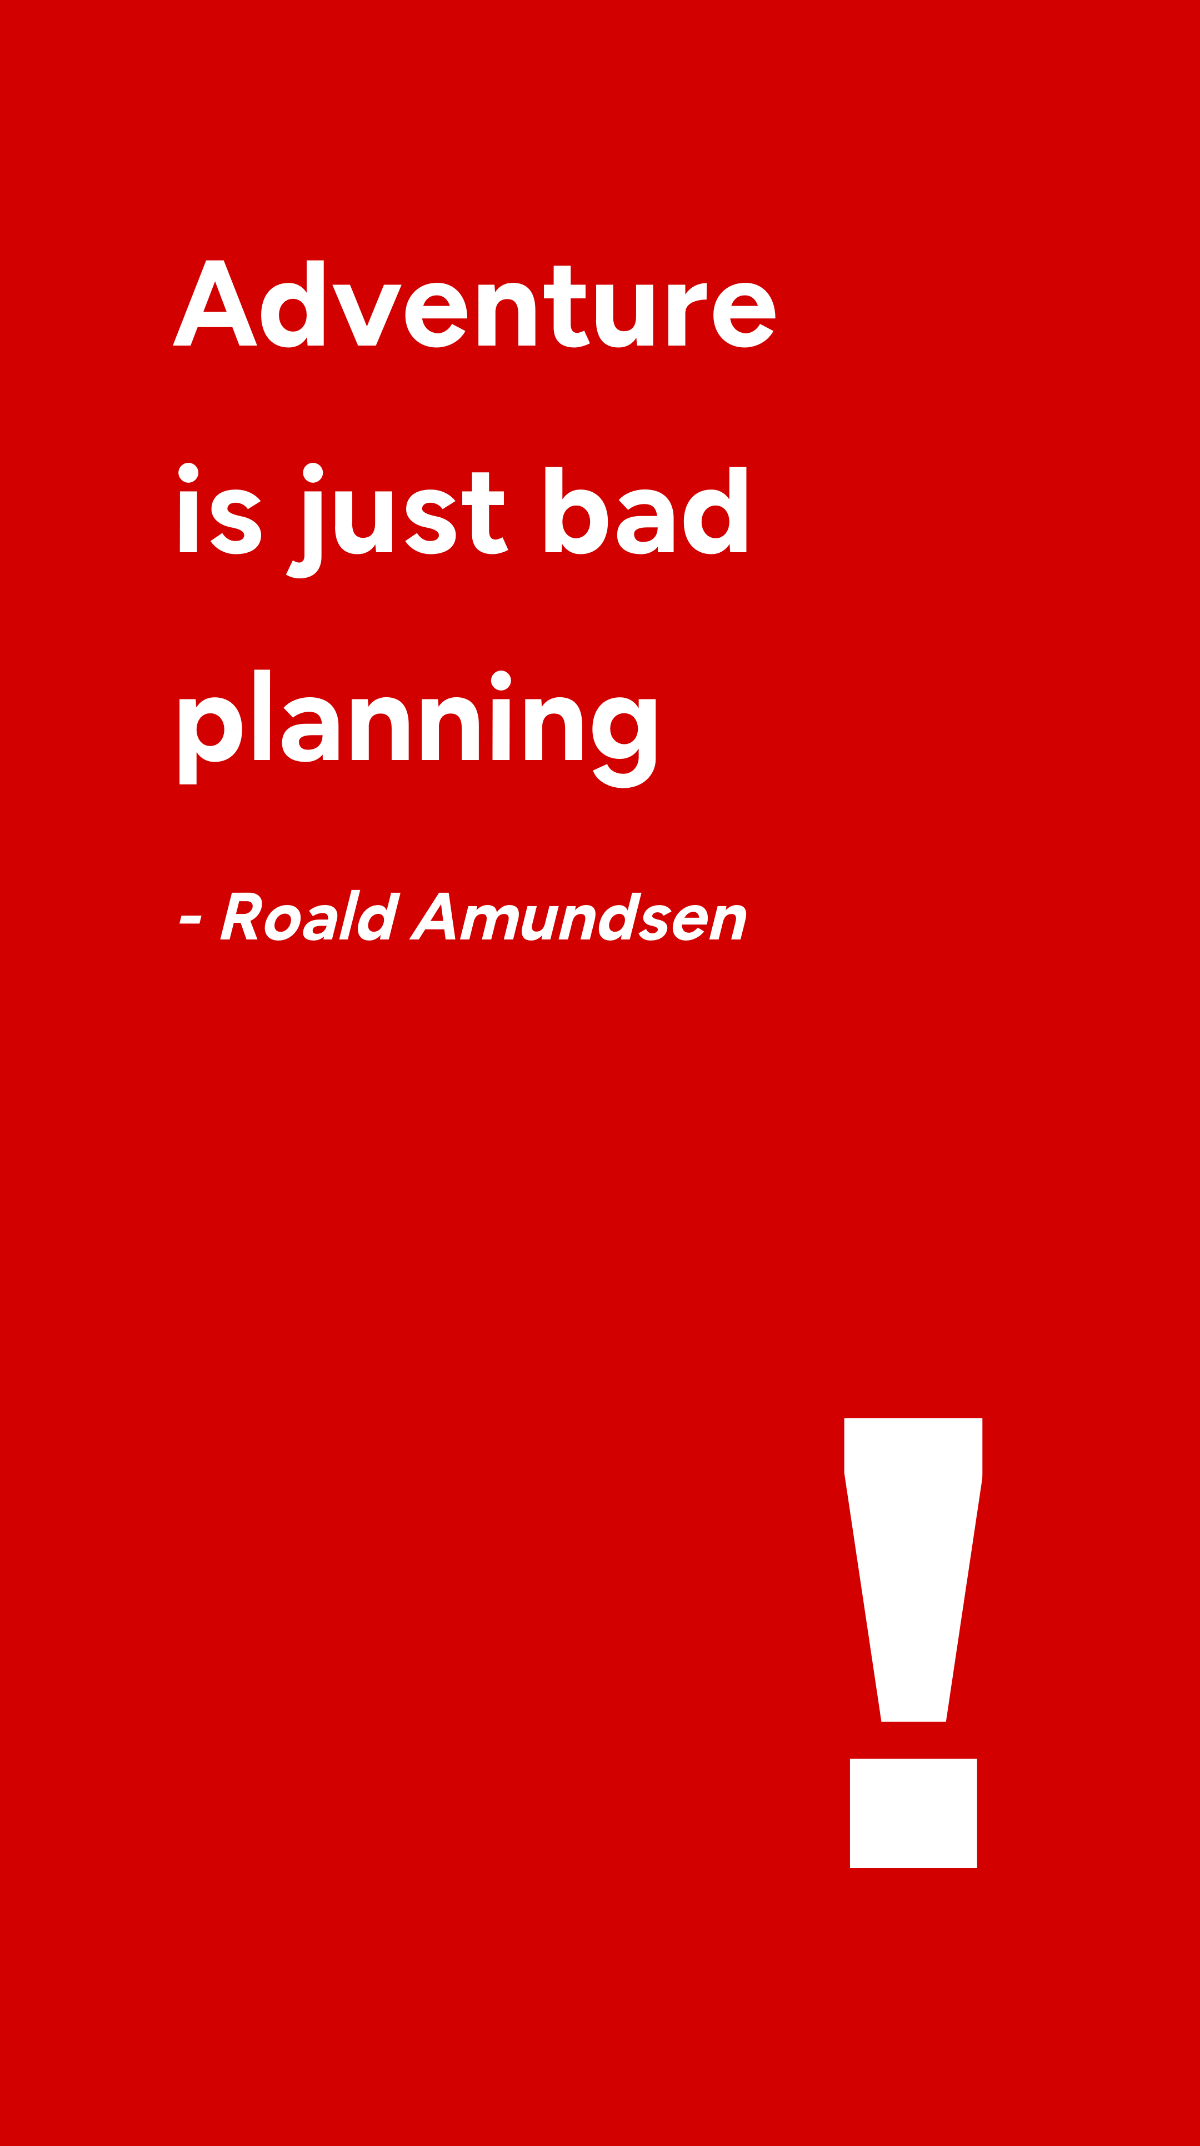 Roald Amundsen - Adventure is just bad planning